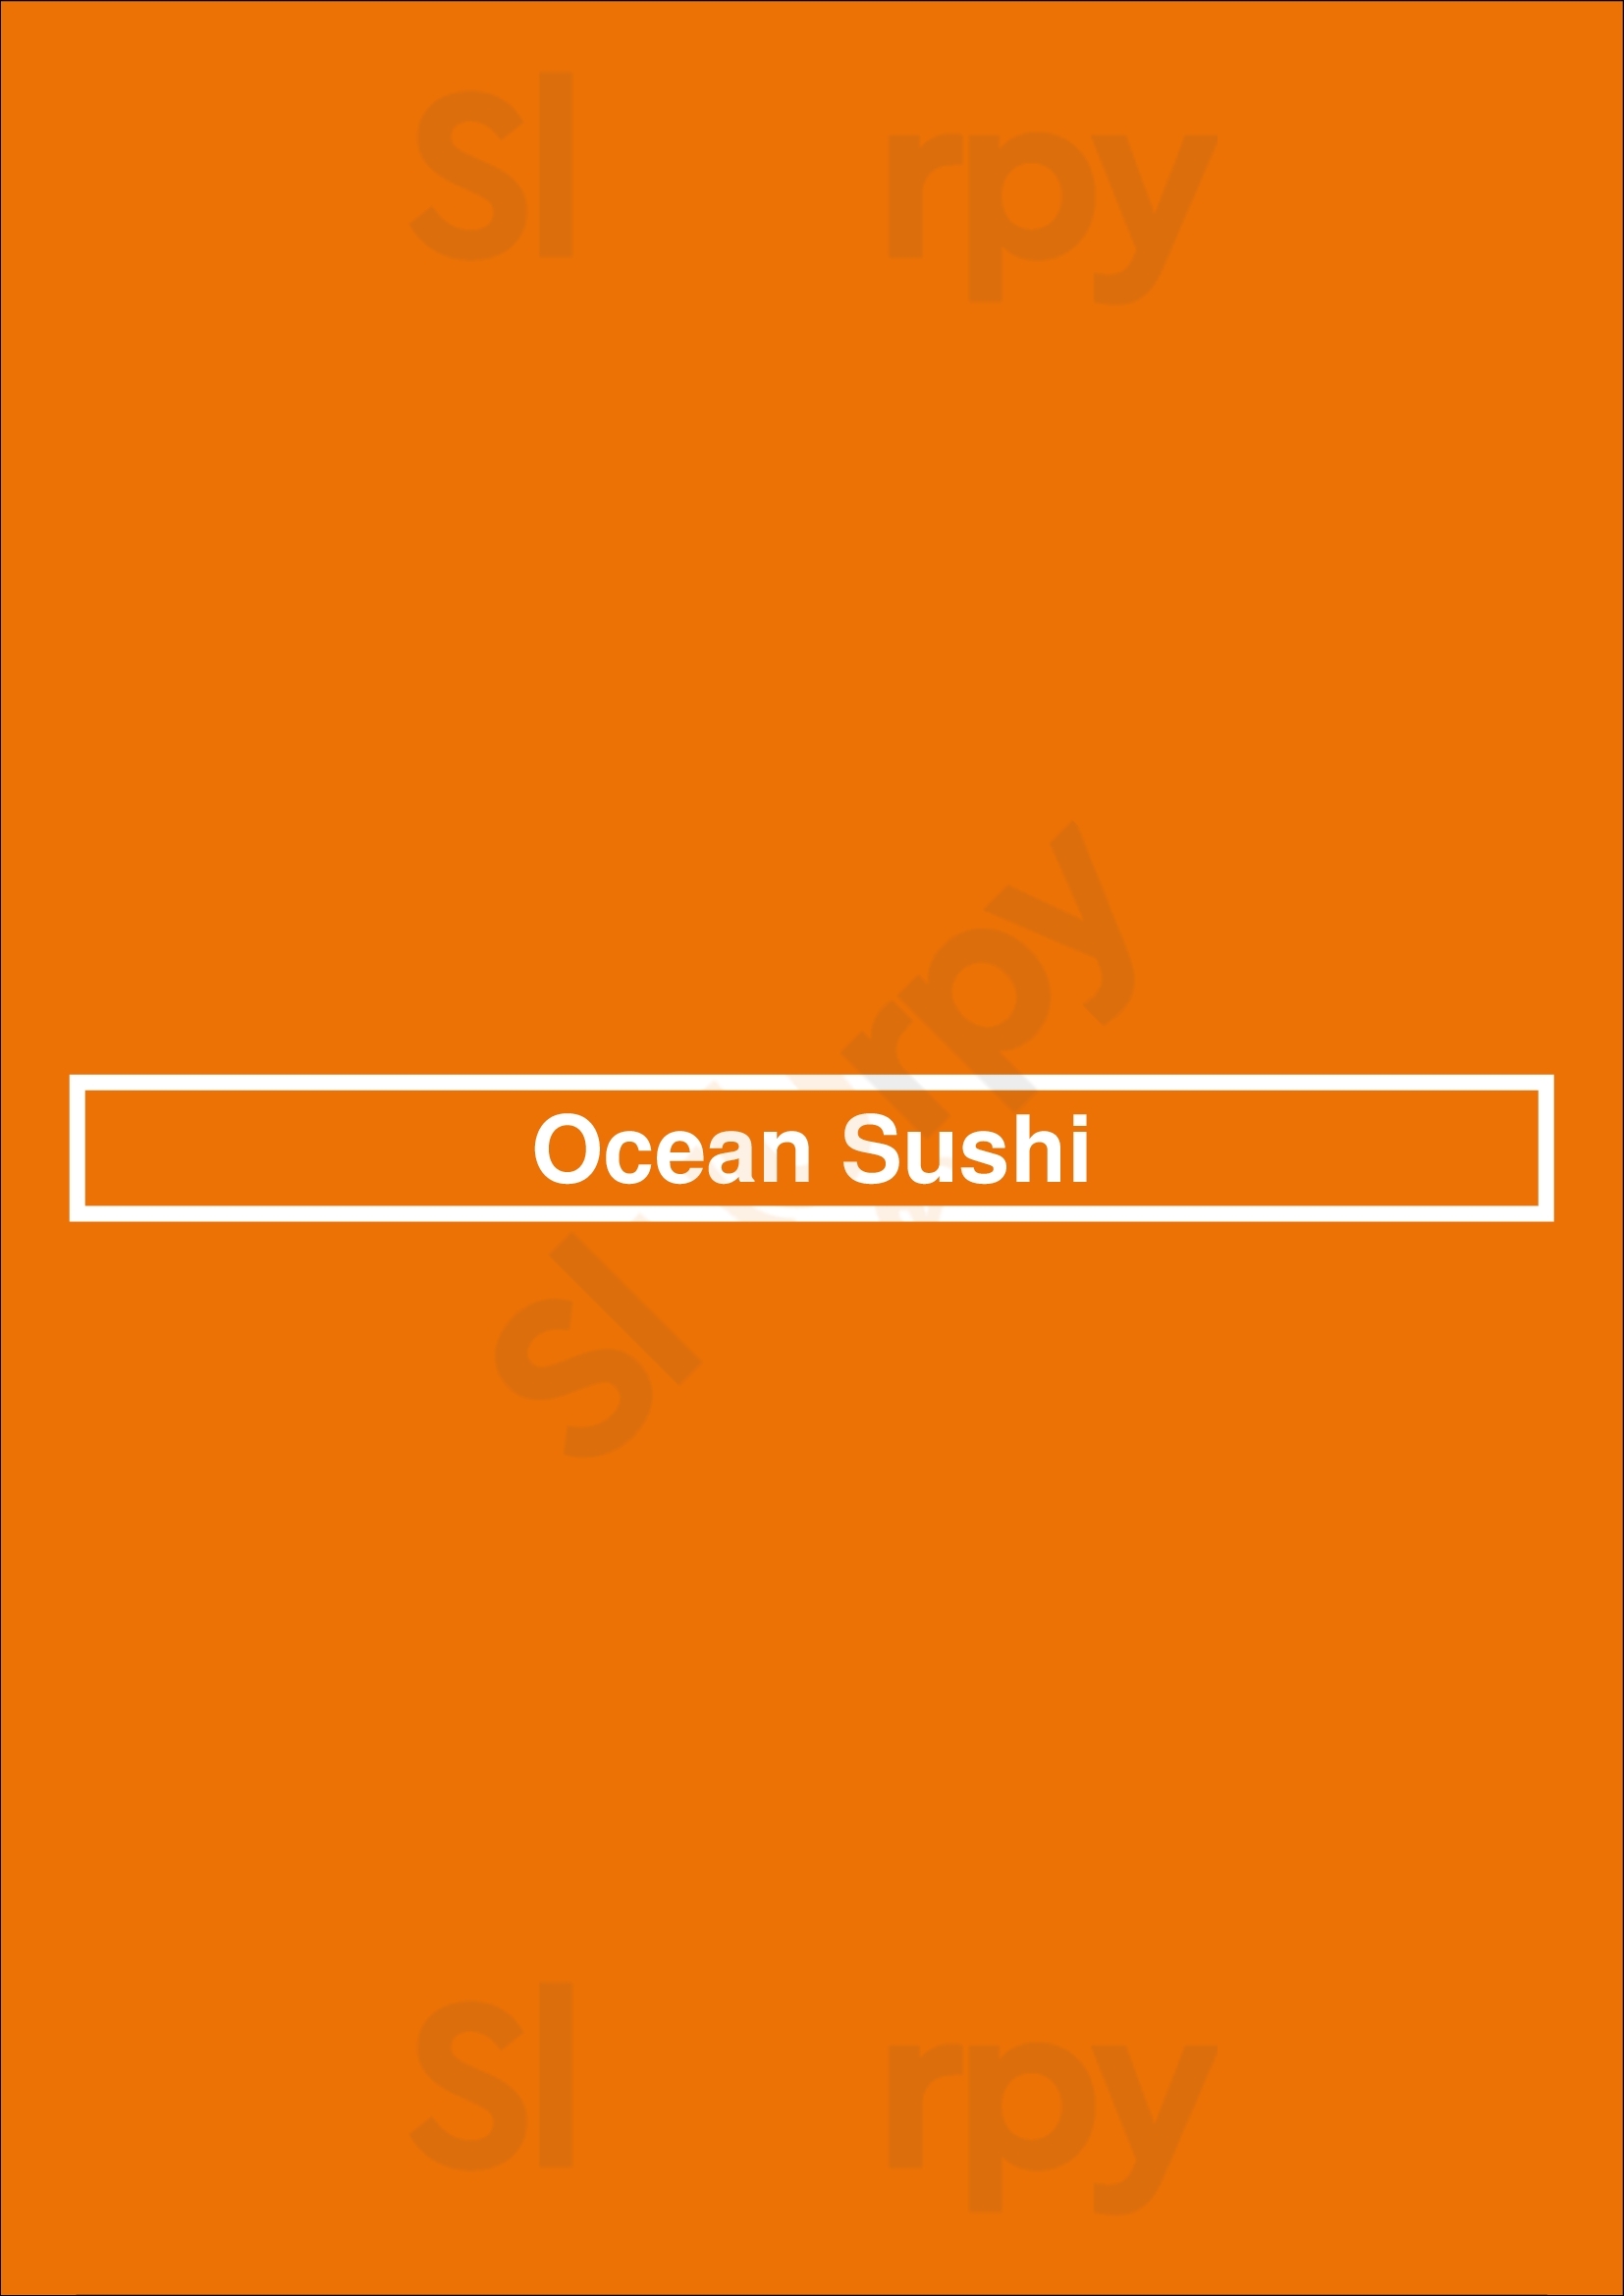 Ocean Sushi Chicago Menu - 1